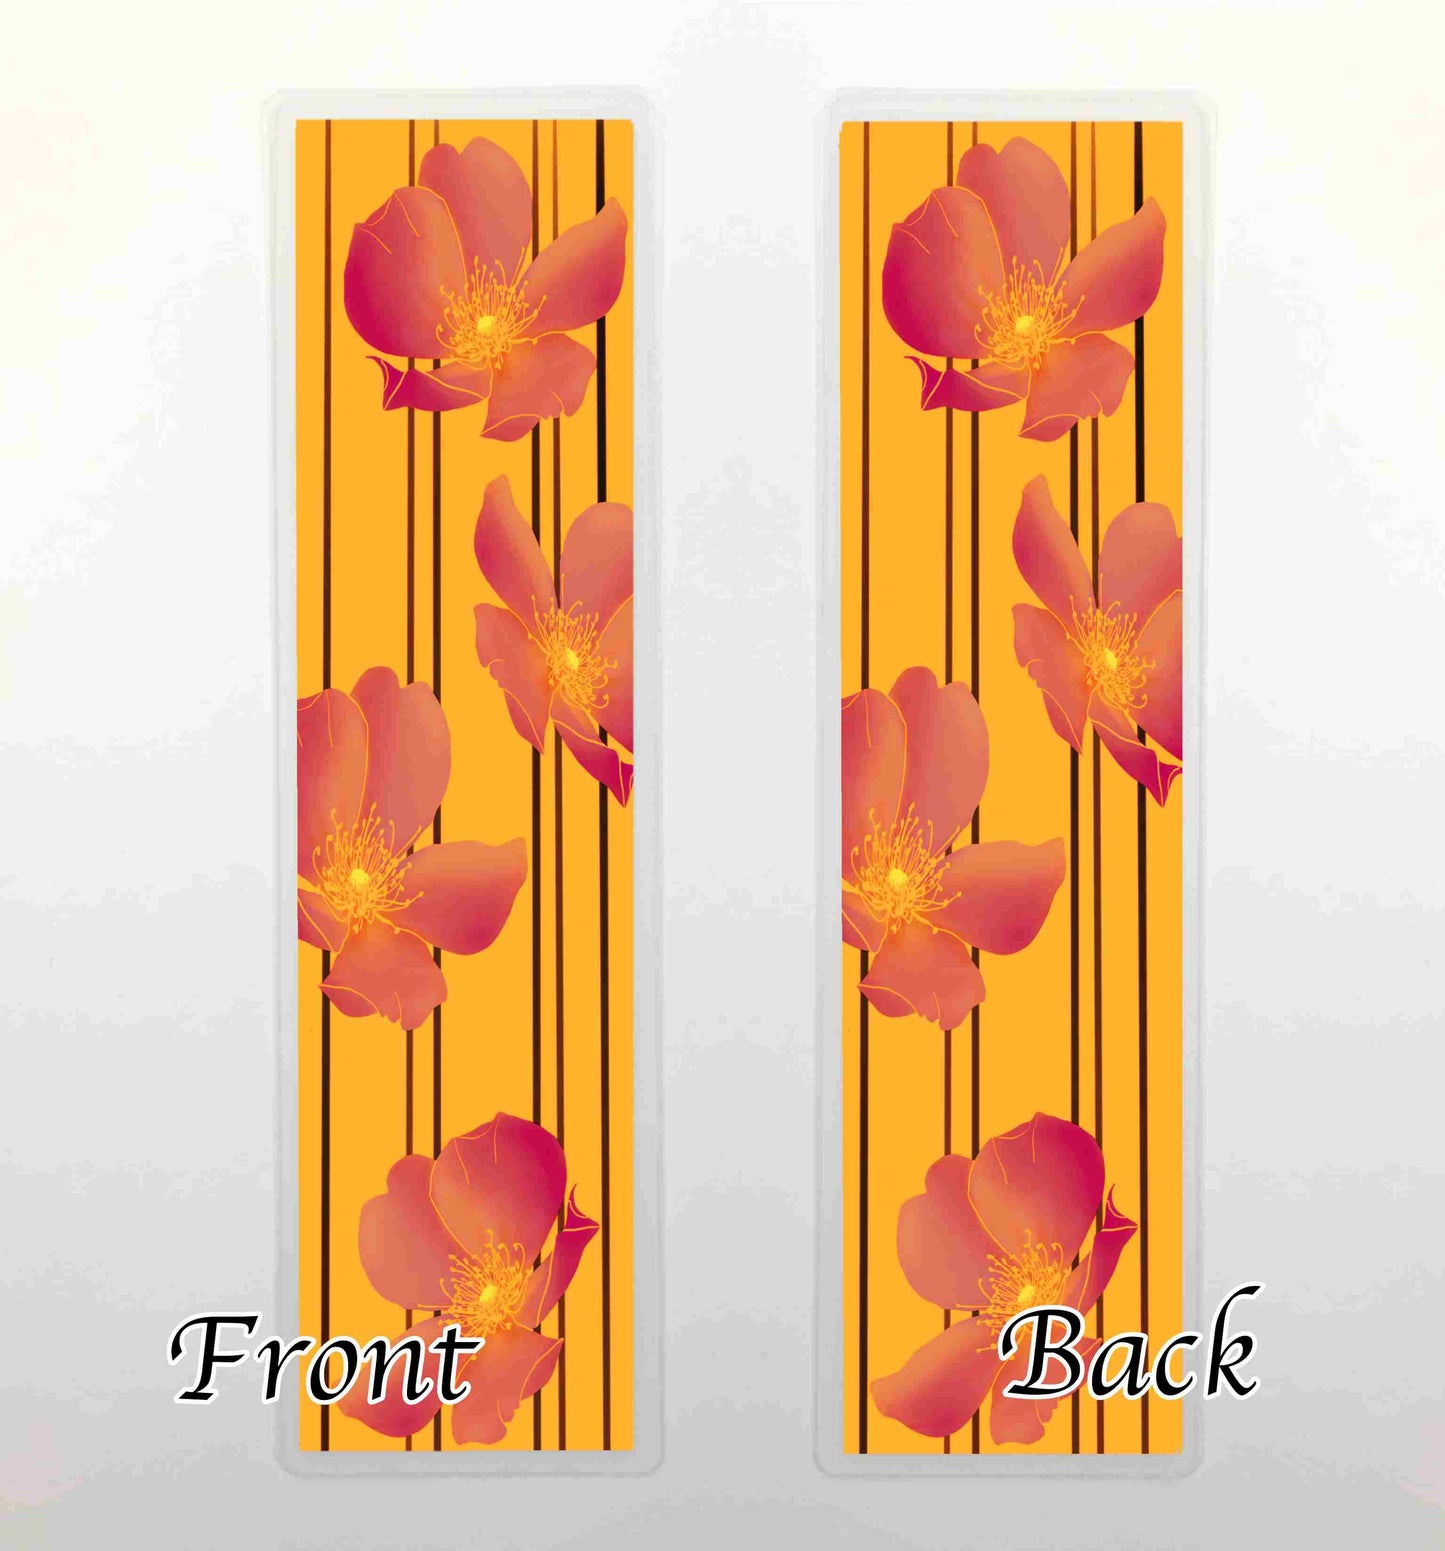 PinkPolish Design Bookmarks "Golden Hour" 2-Sided Bookmark